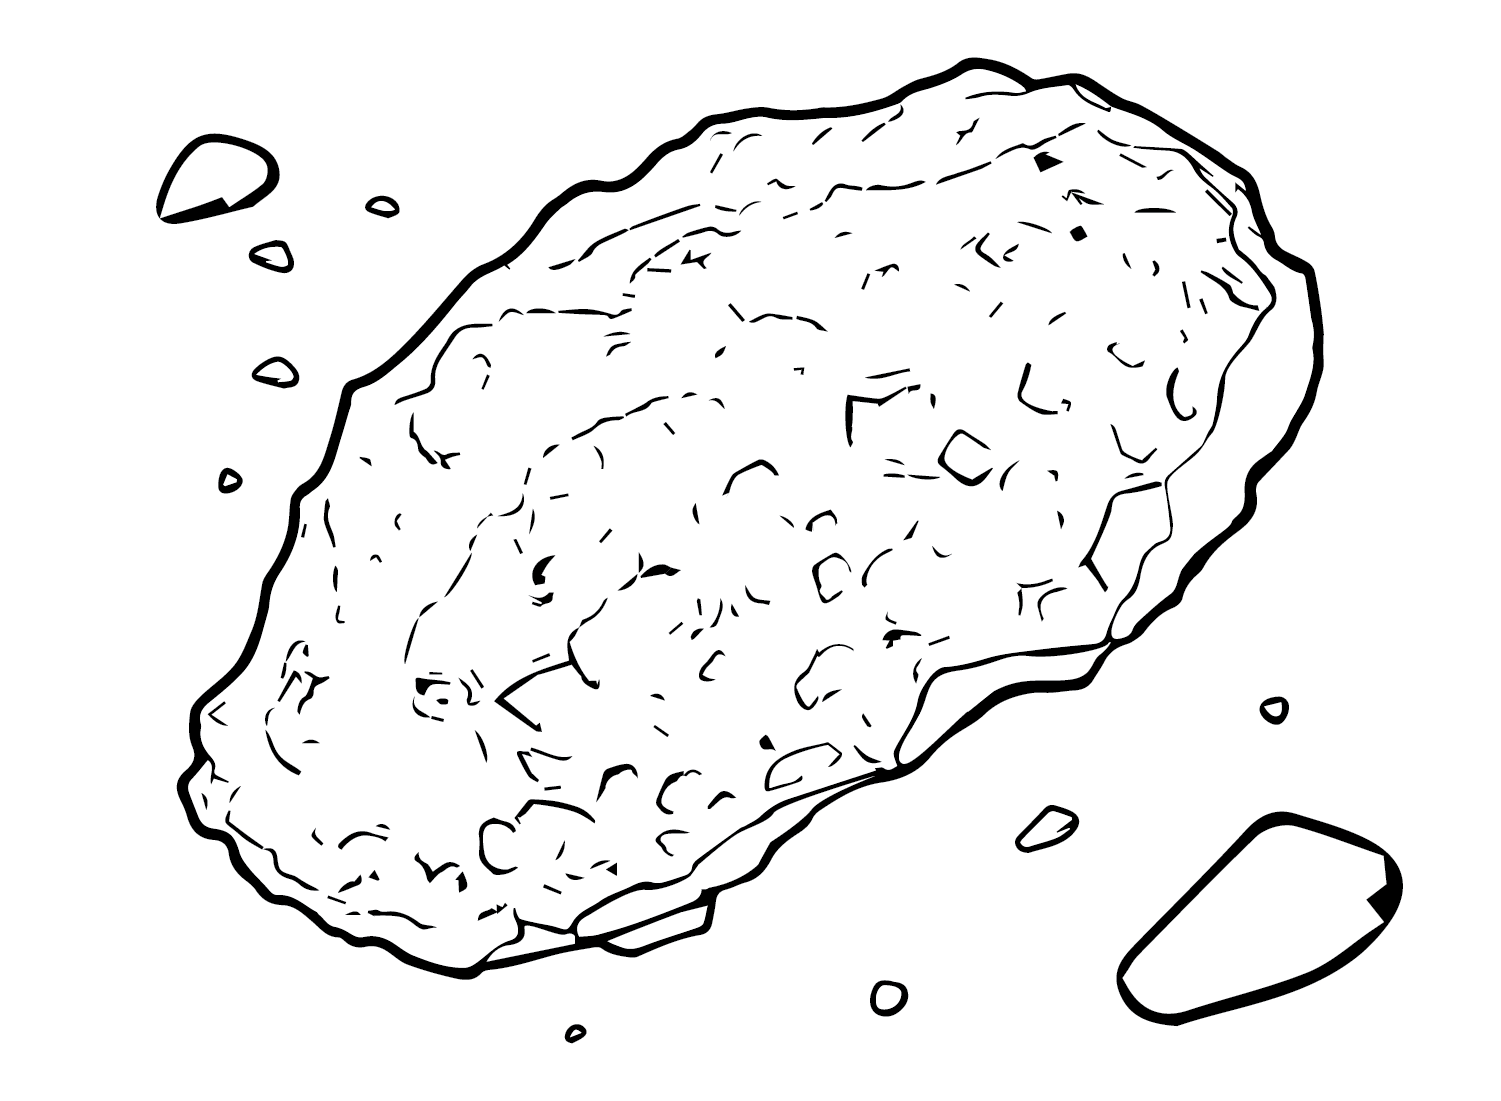 Asteroïde tekening van asteroïde